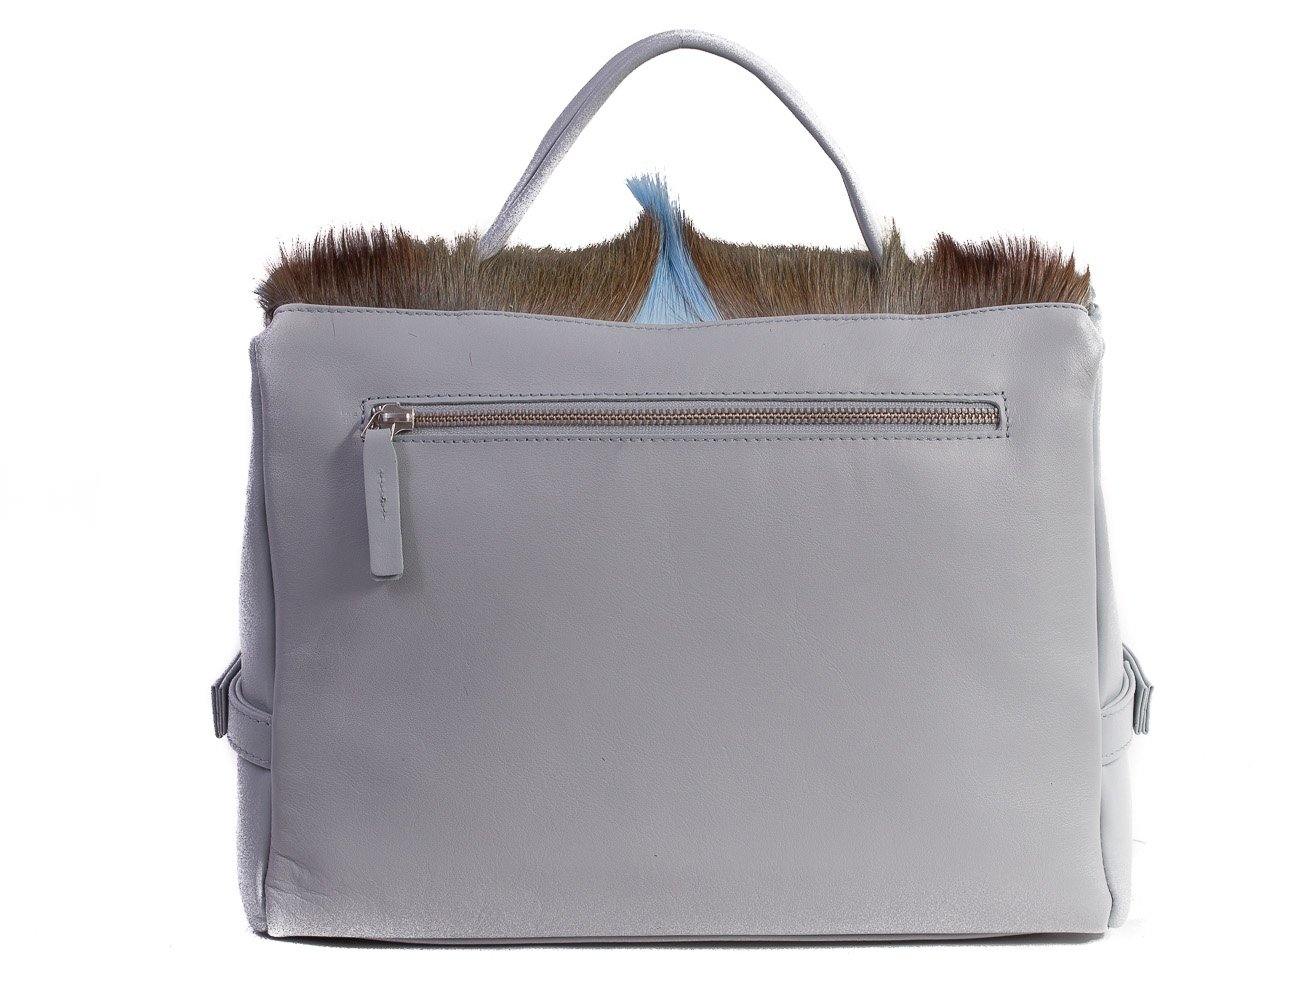 sherene melinda springbok hair-on-hide baby blue leather smith tote bag Fan back